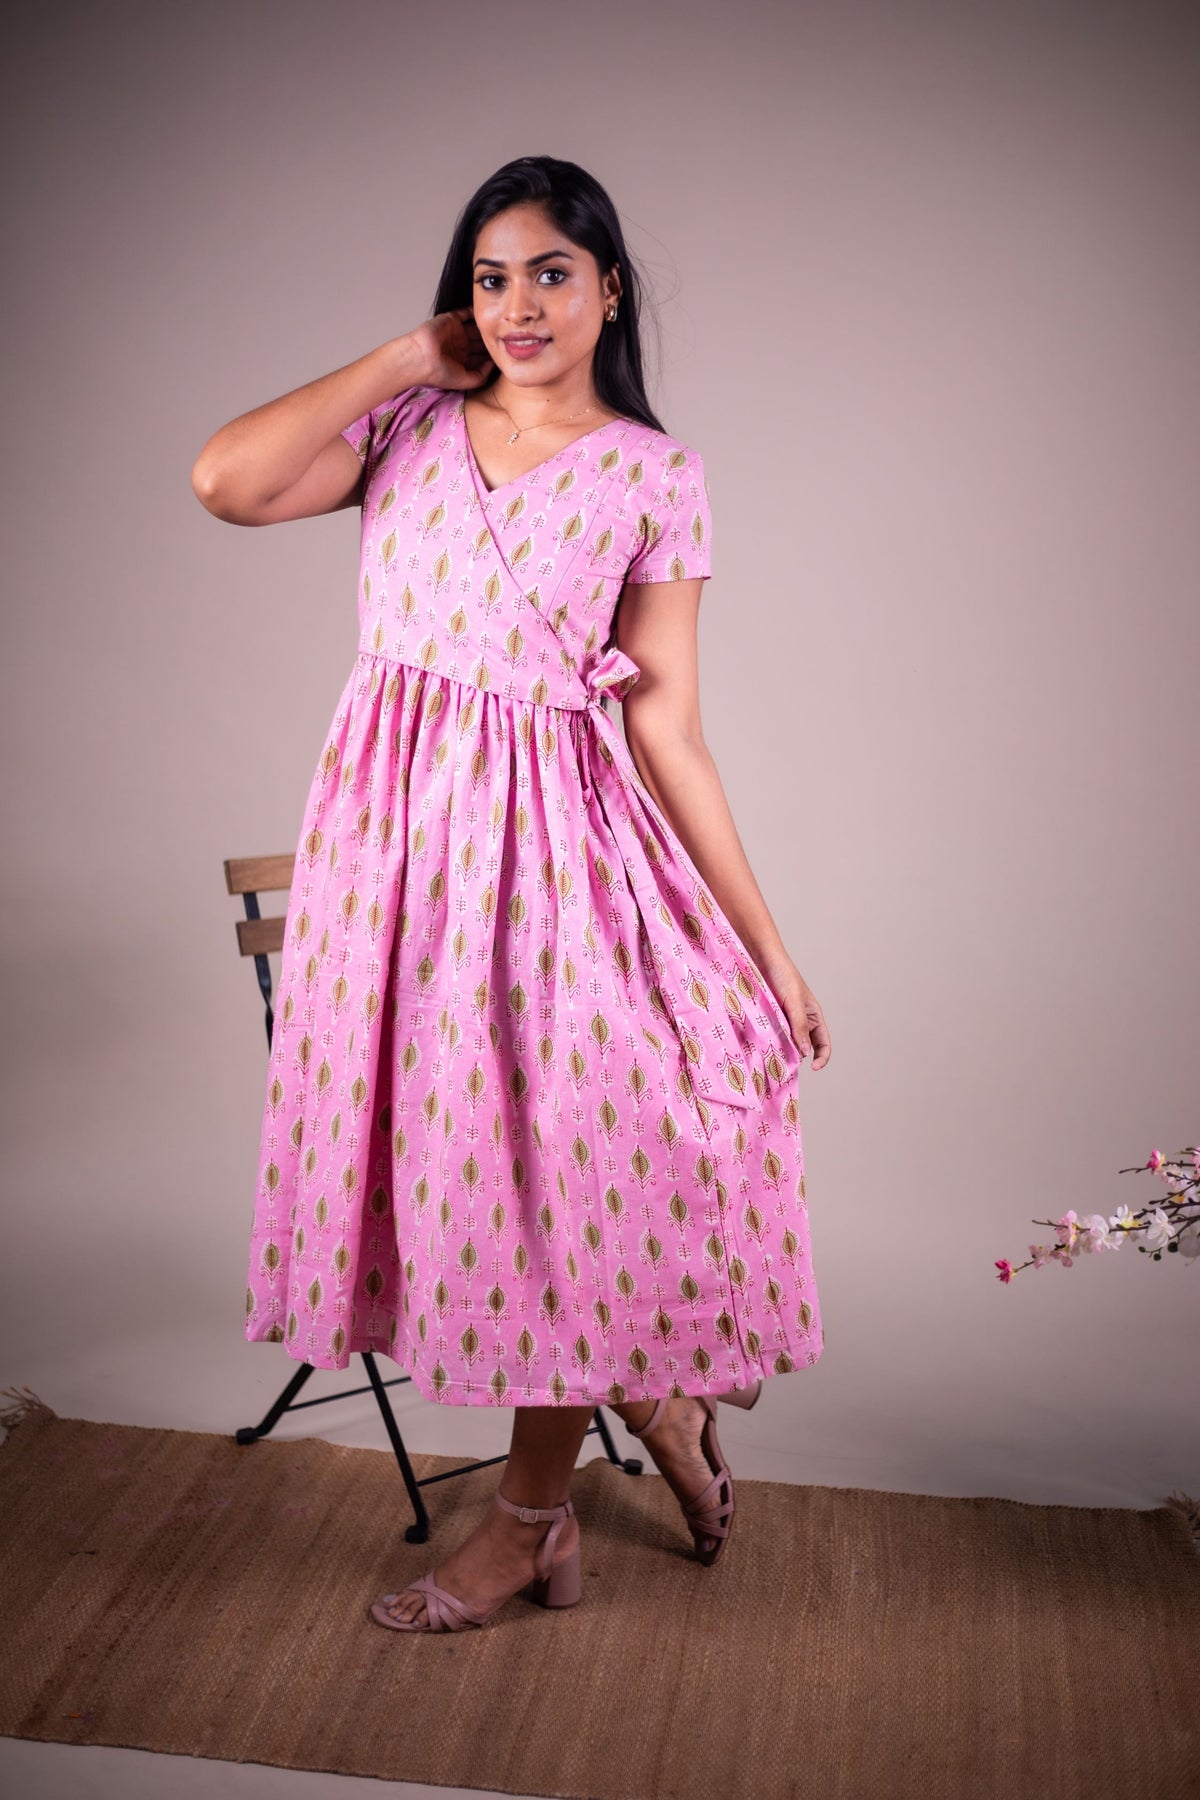 Rose Bud – A cute Pink dress